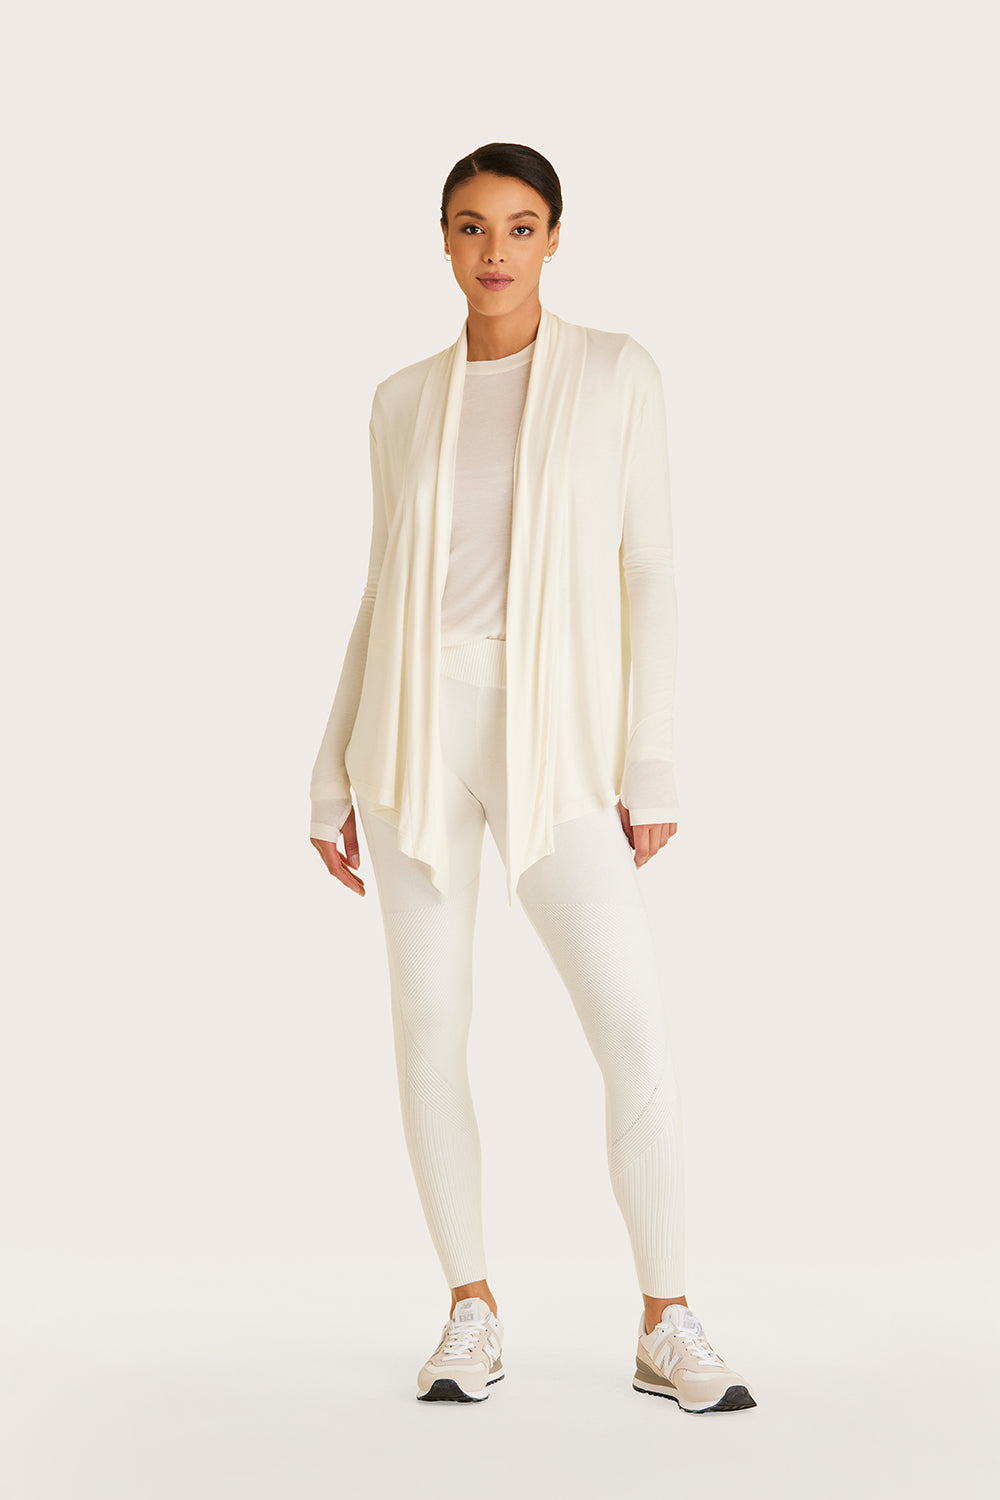 Alala women's cashmere open cardigan in white